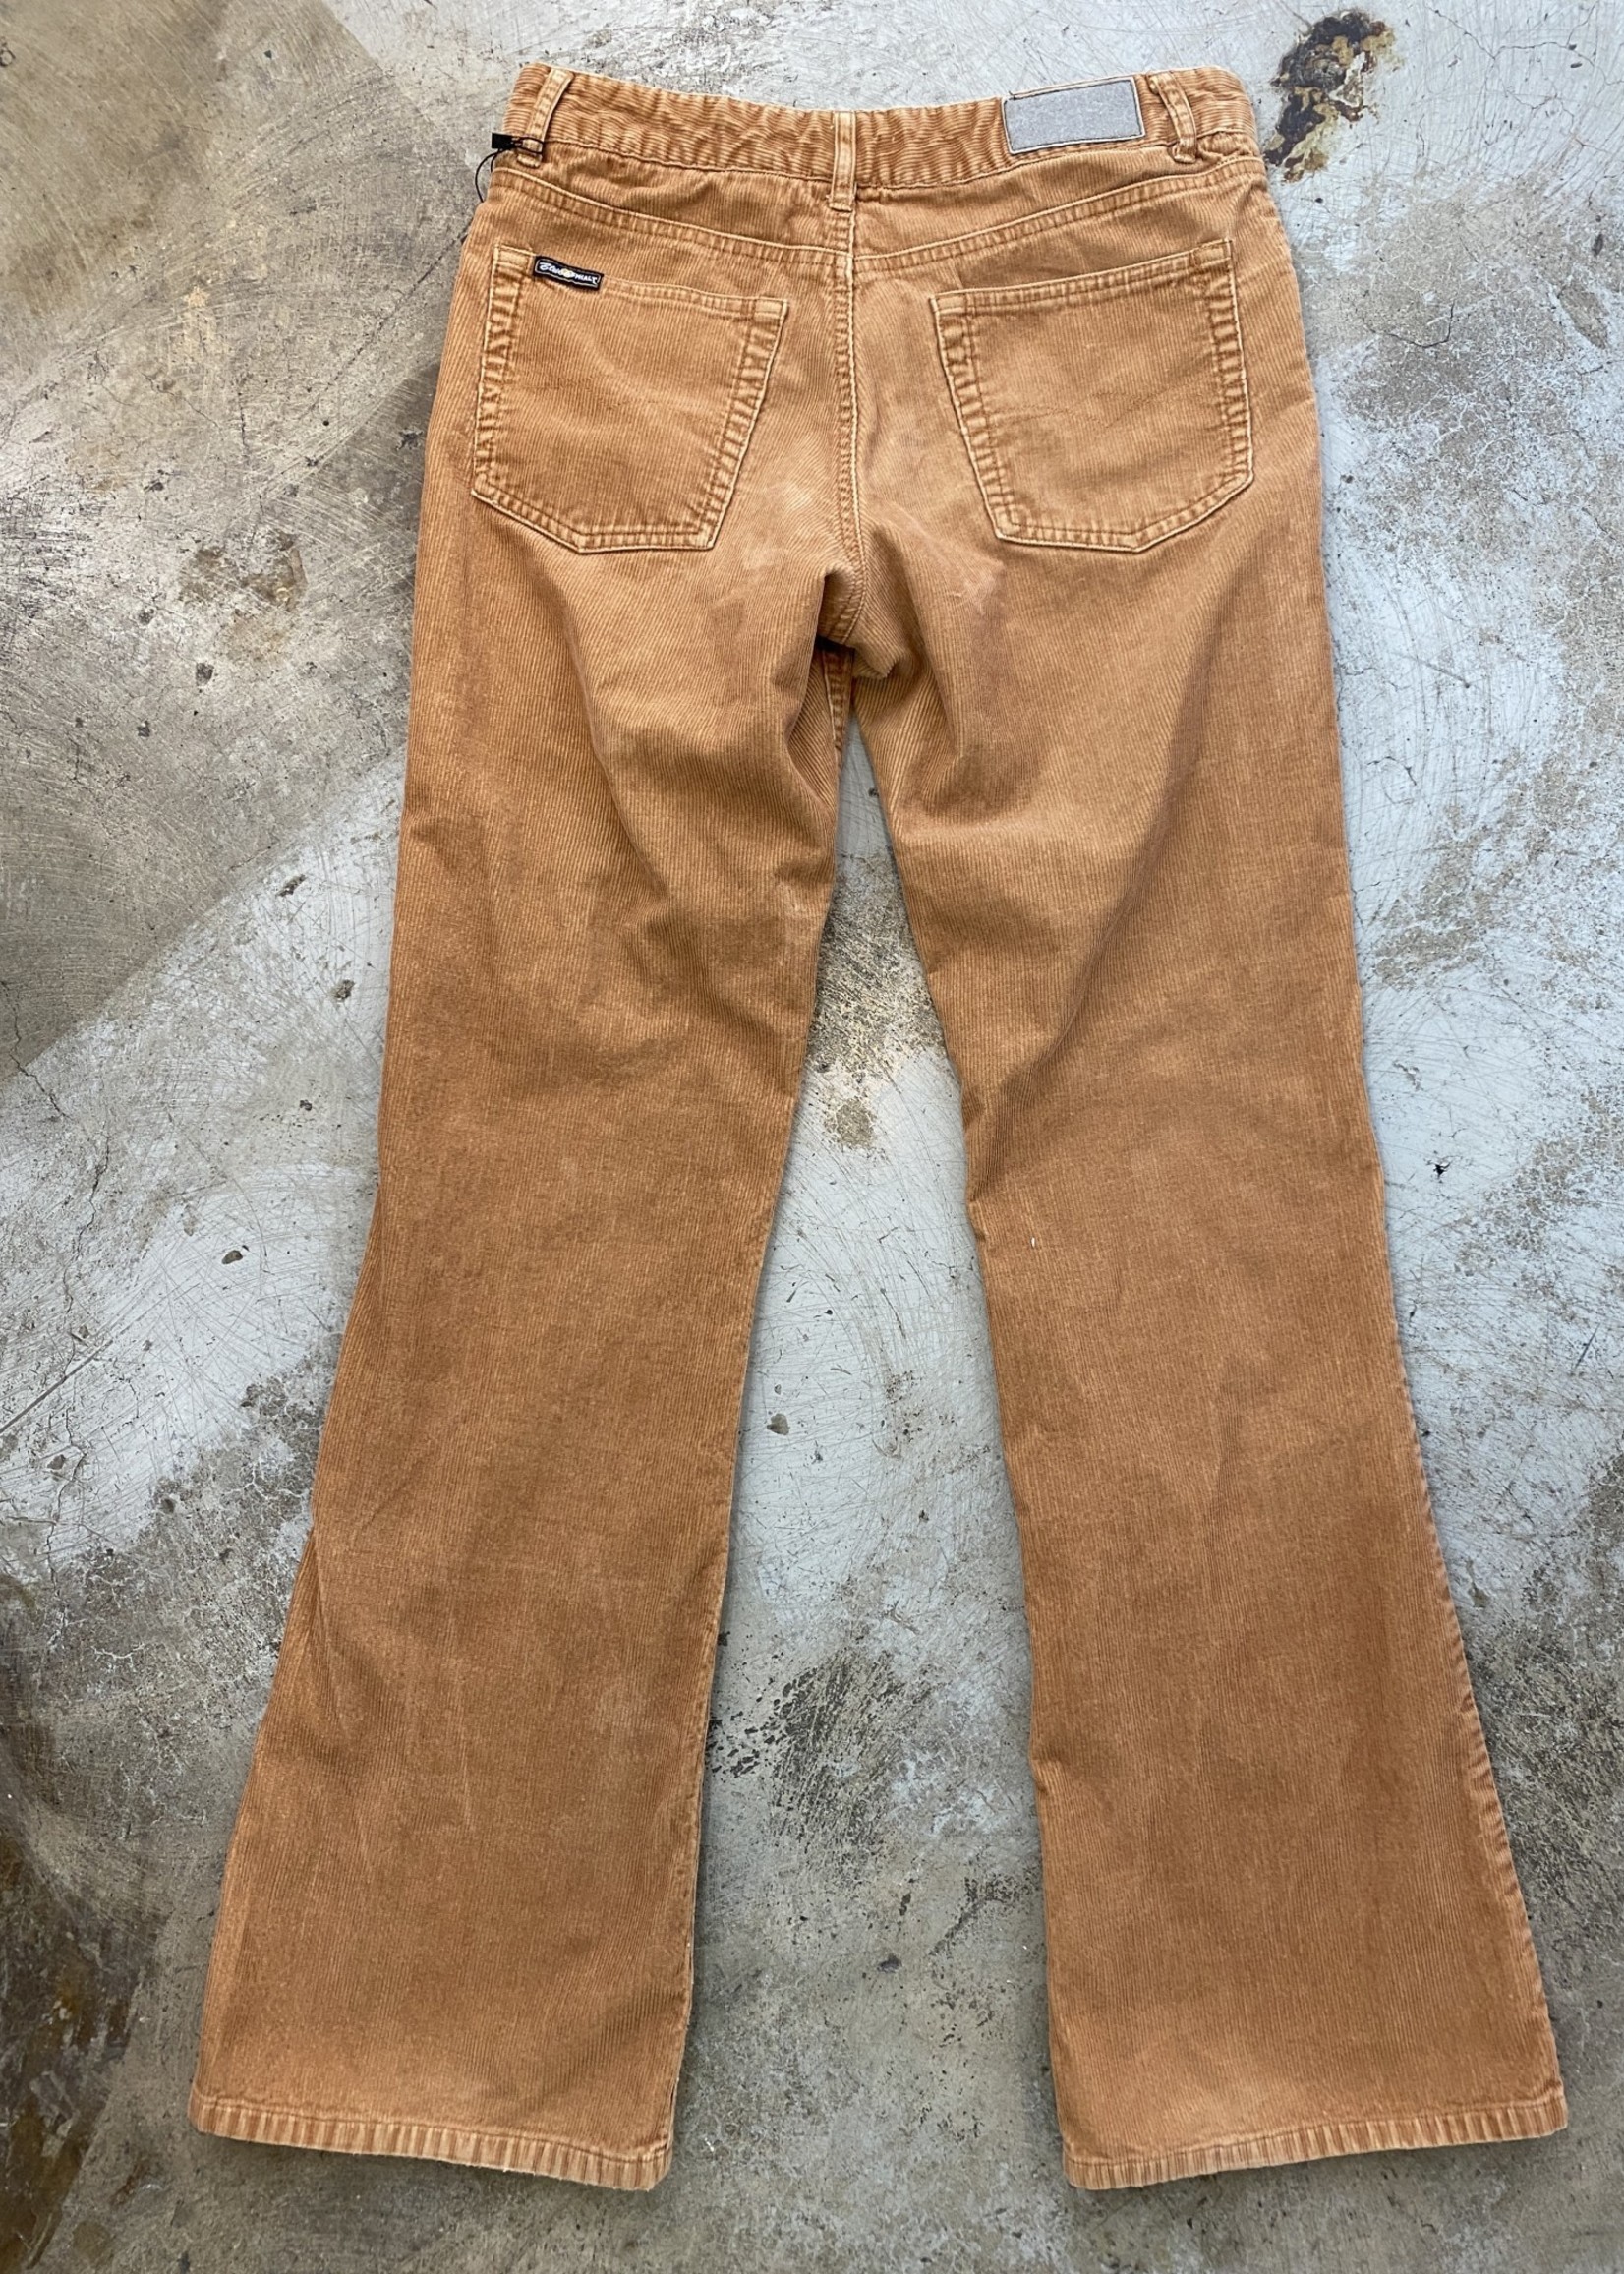 Blue Asphalt Orange Flare Pants 27